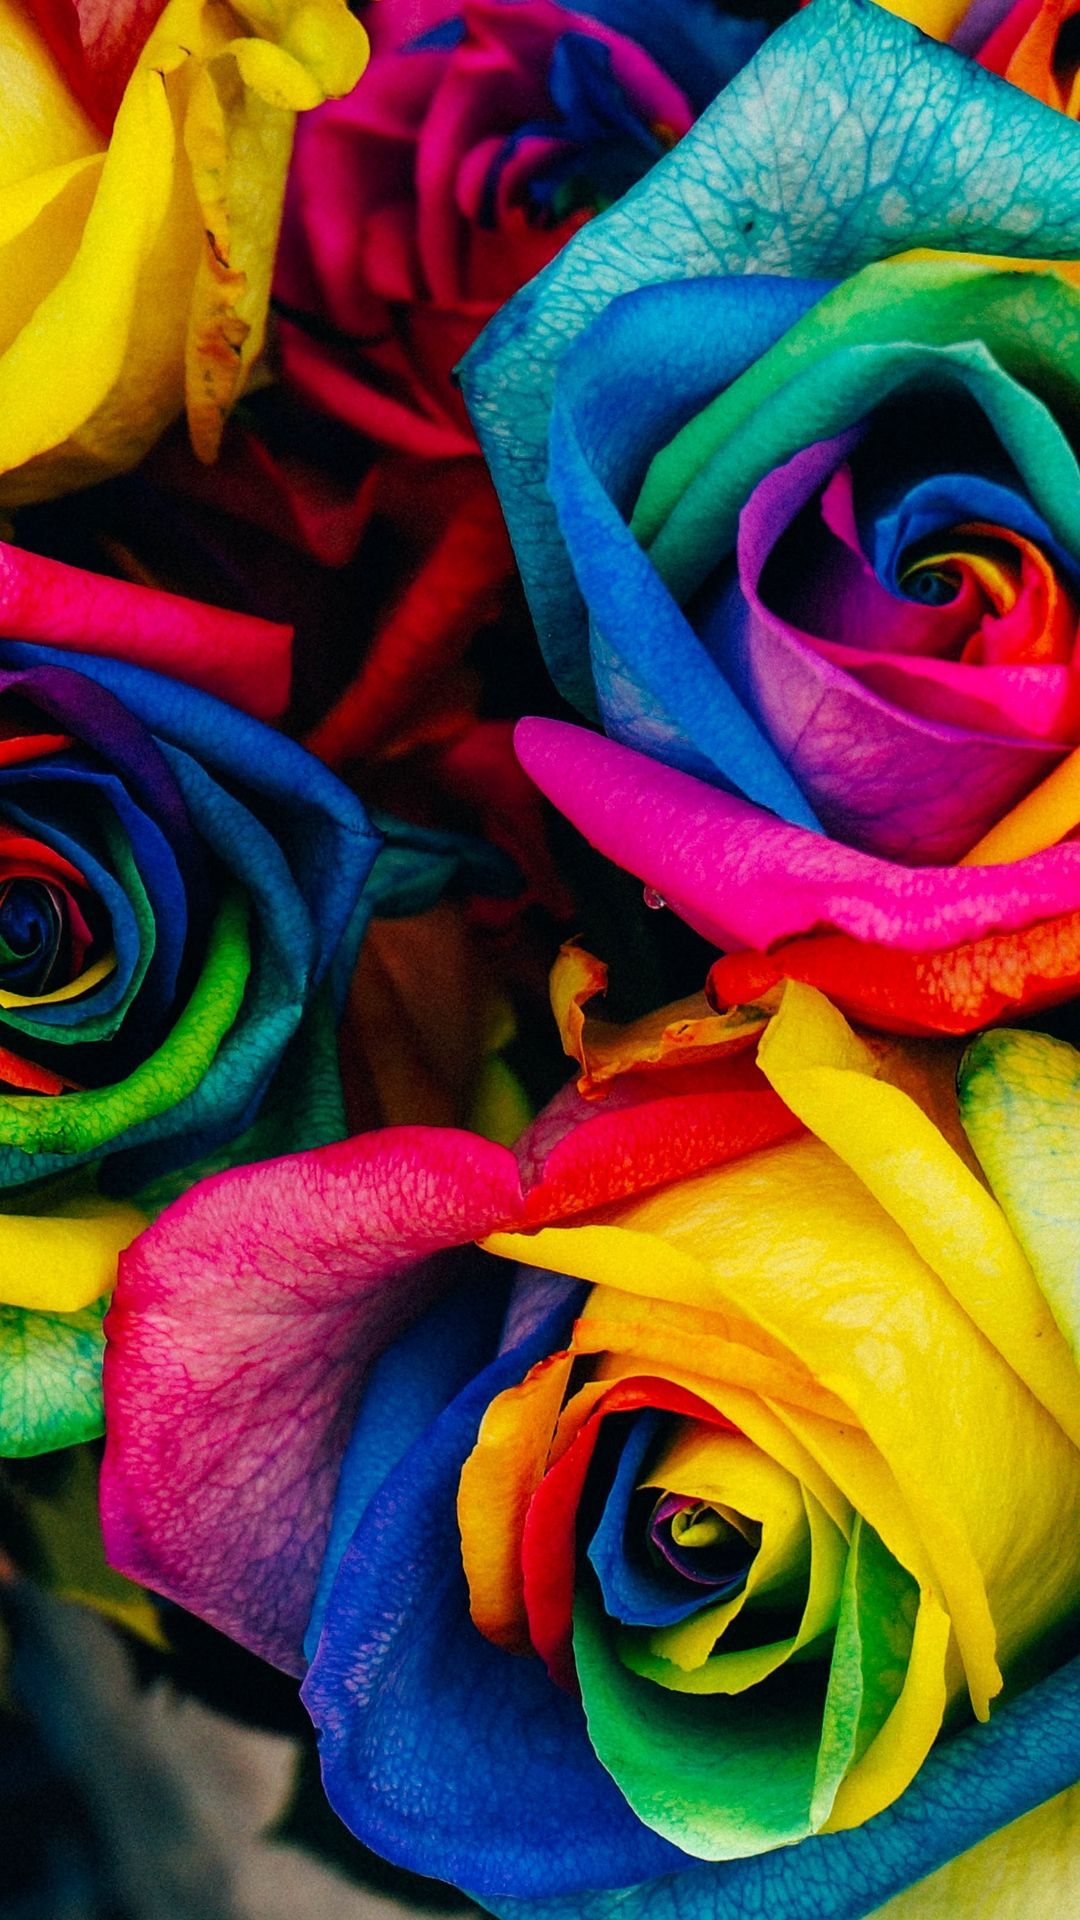 rainbow #test1 #colorful #roses #flowers #wallpaper #lockscreen